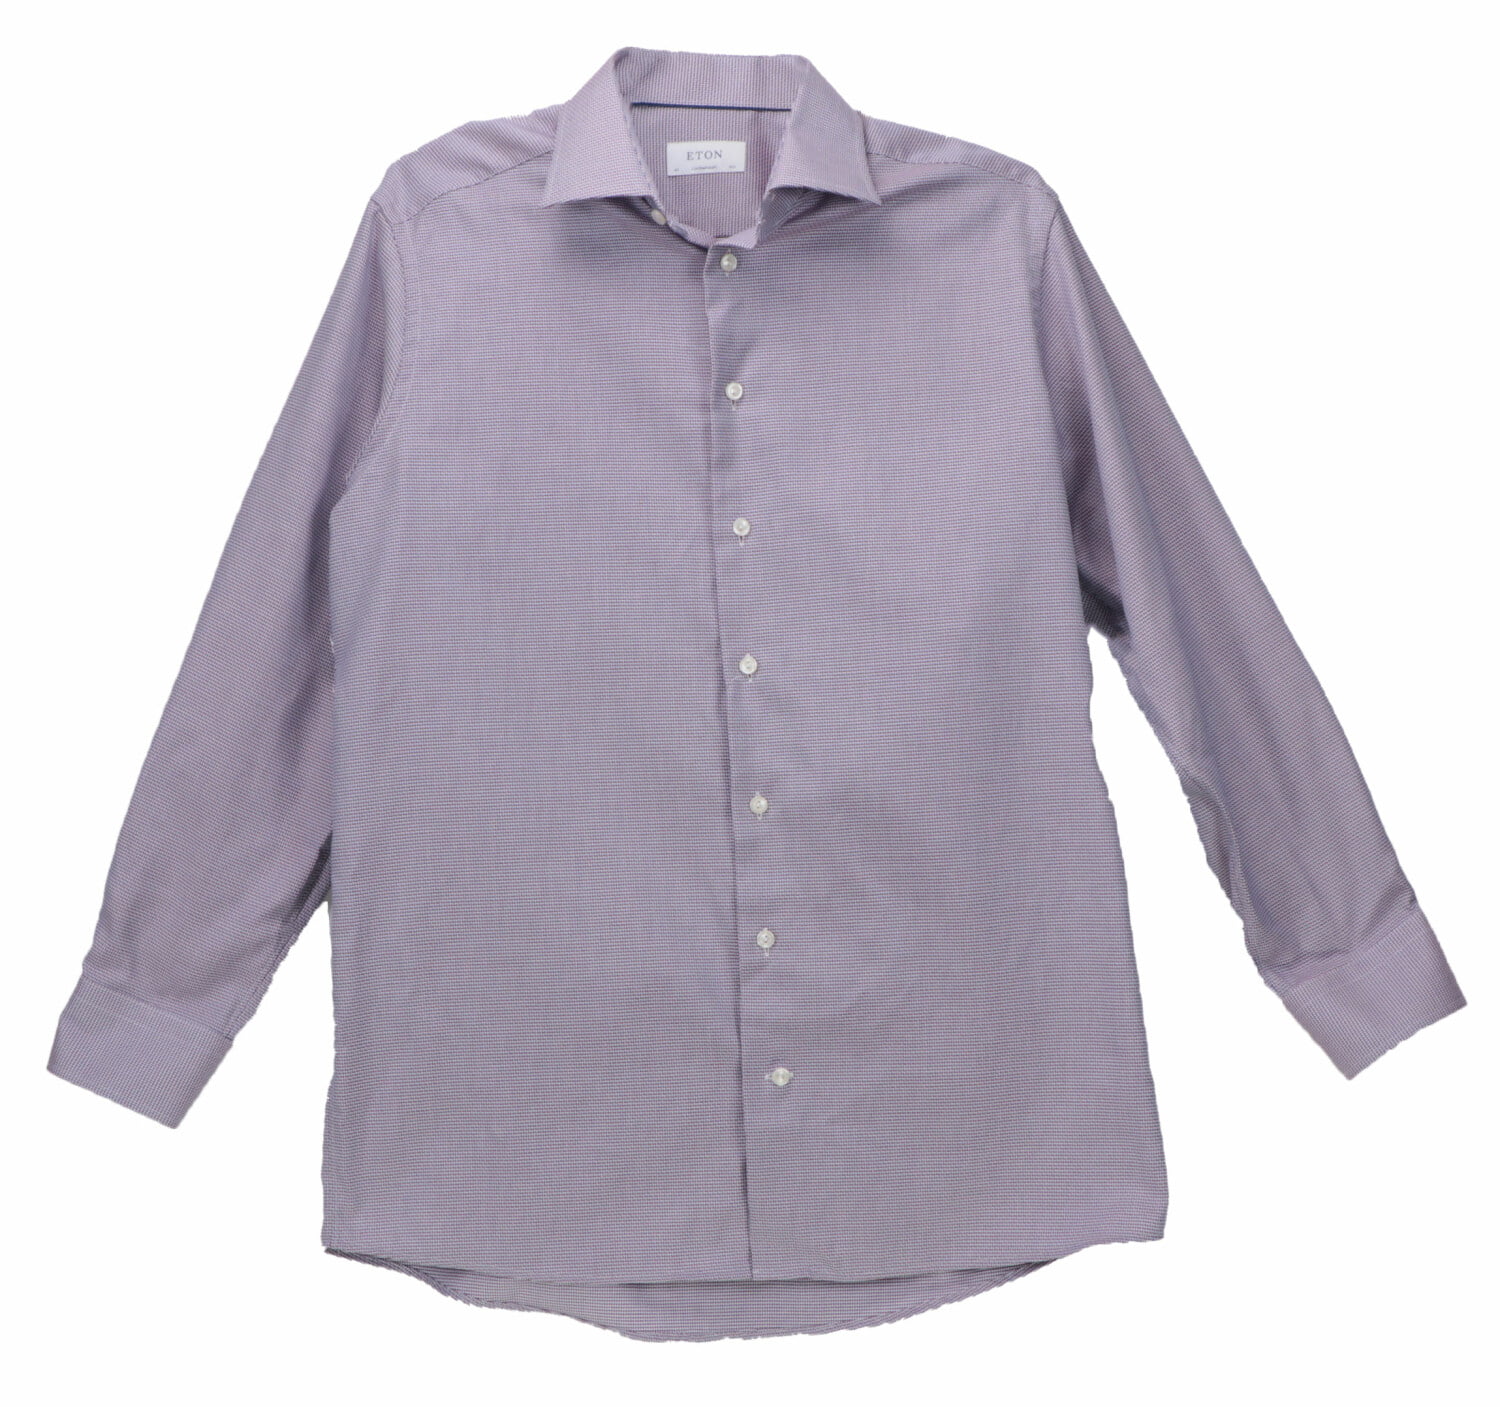 Integreren Overjas Niet essentieel Eton Men's Red / Blue White Contemporary Woven Cotton Button Down Shirt  Dress - 42-16.5 (L) - Walmart.com